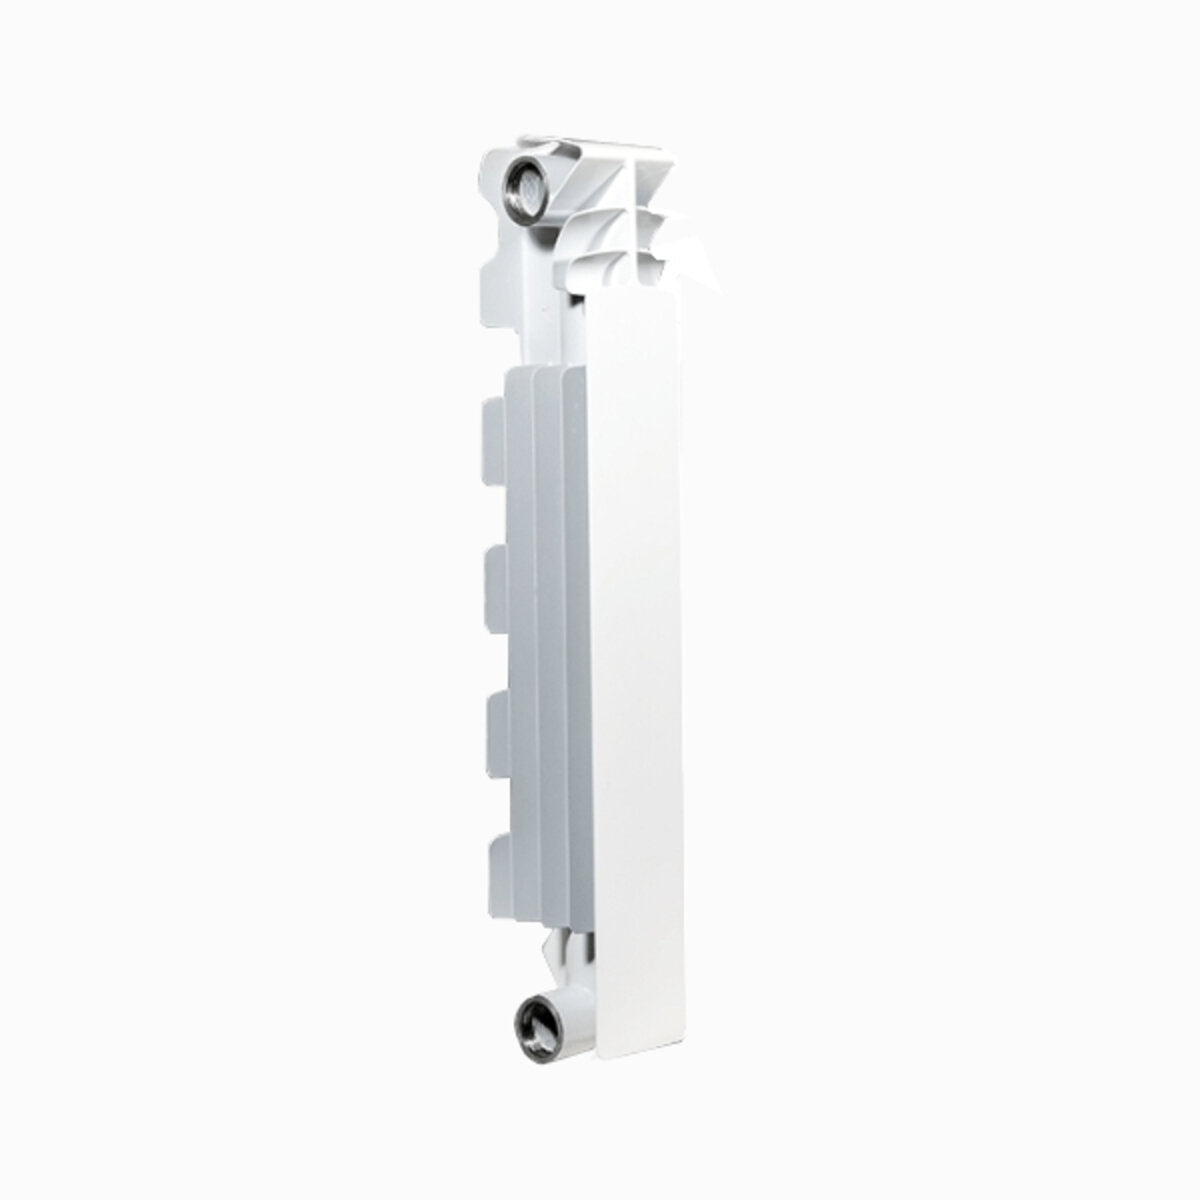 Fondital radiator in die-cast aluminum Exclusivo B3 single element center distance 800 mm